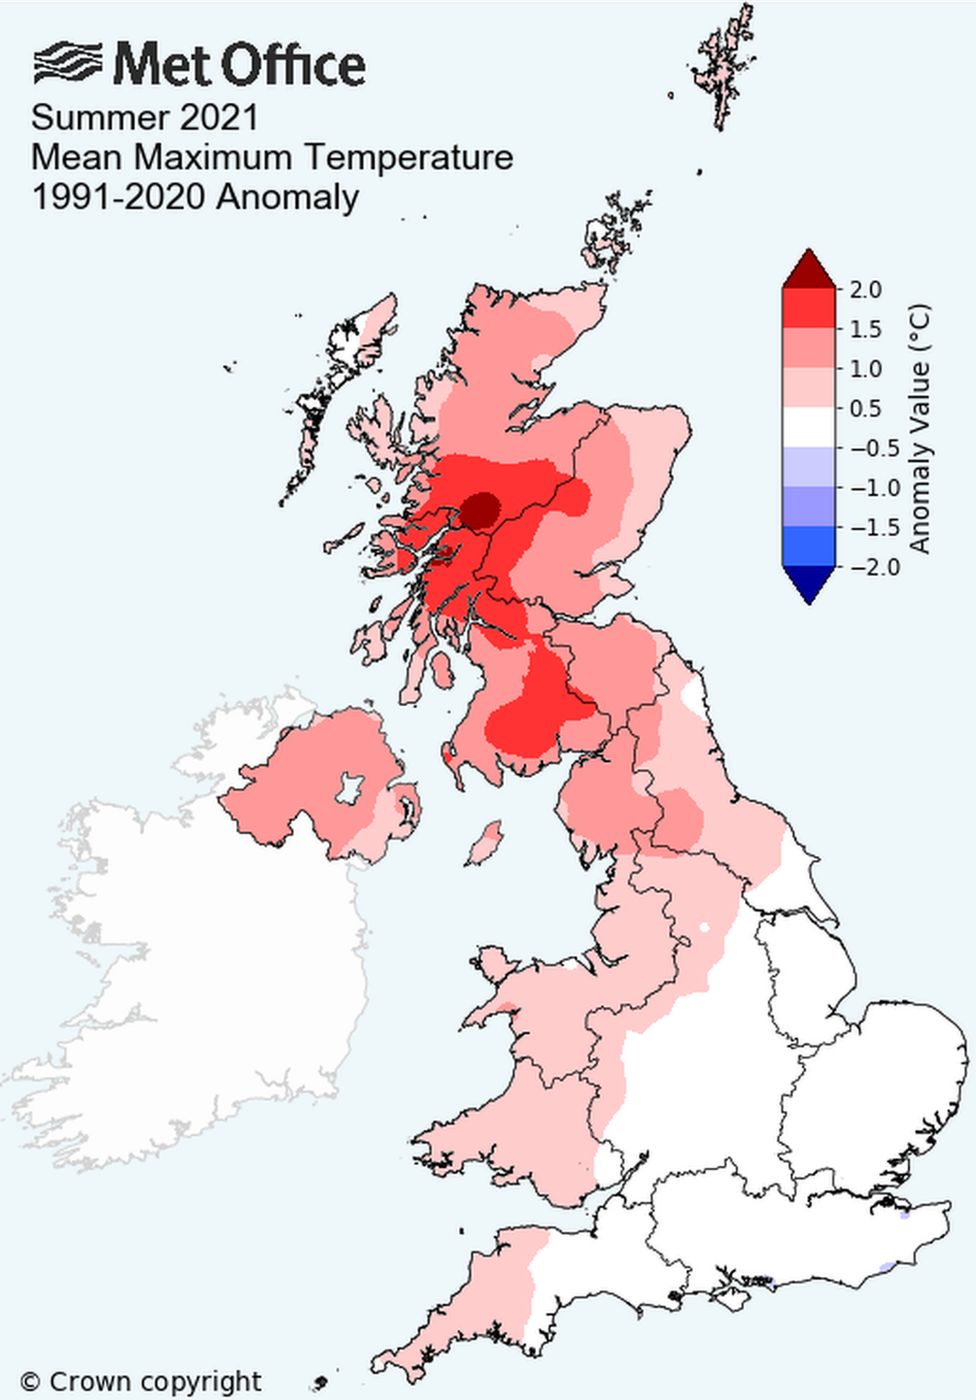 Should Scotland be worried about heatwaves? BBC News